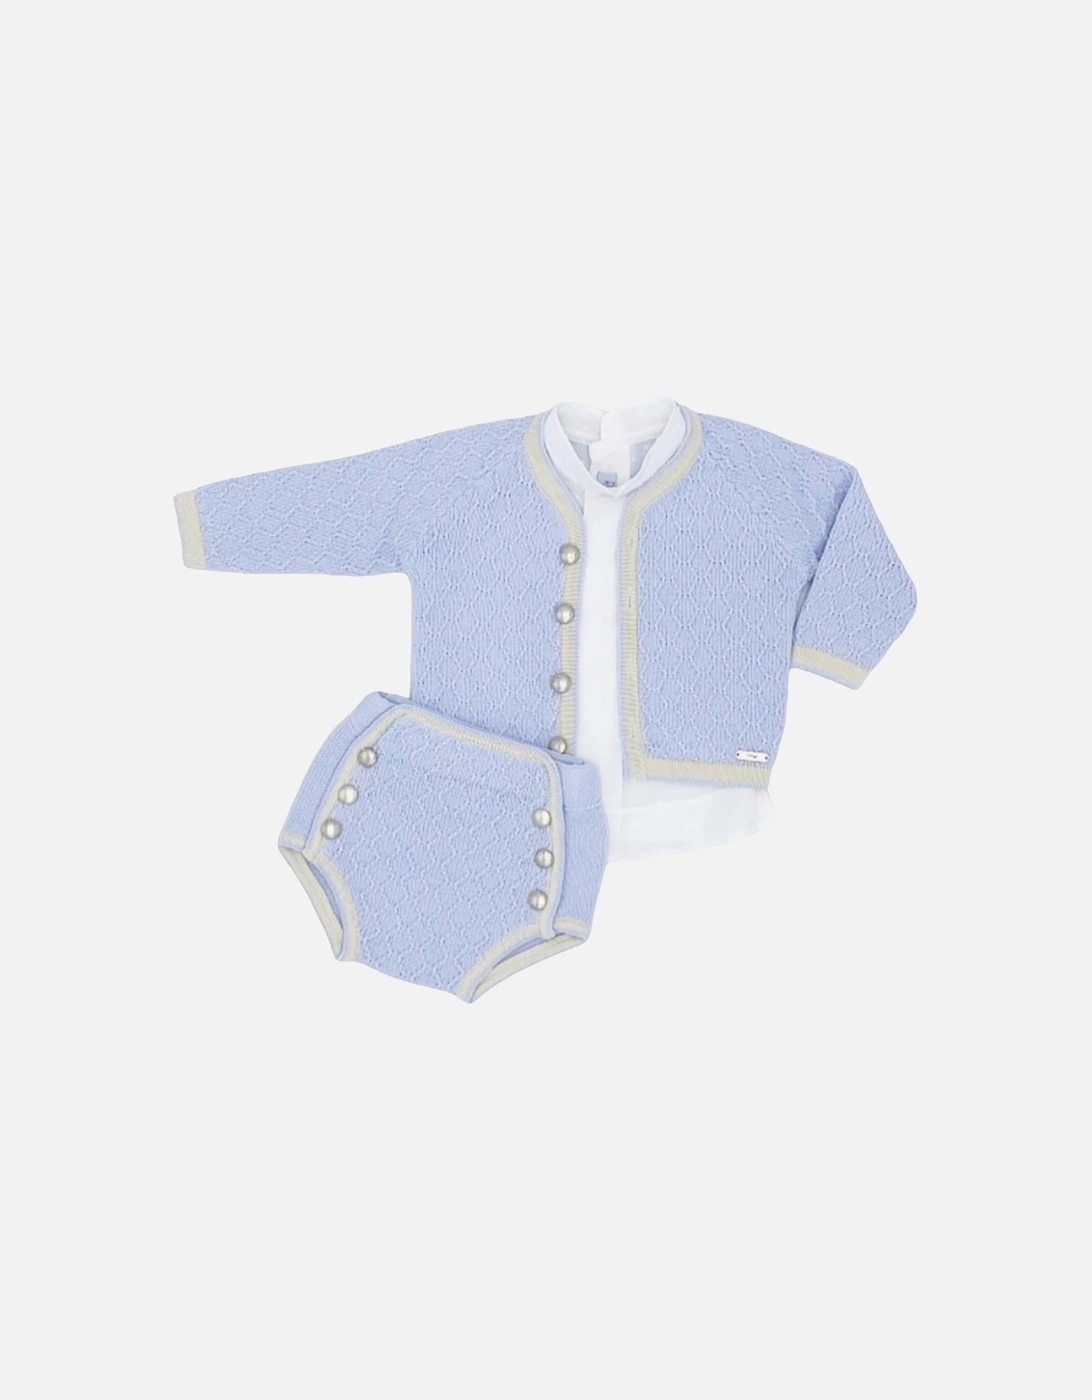 Blue Cream Knit Jam Pant Set